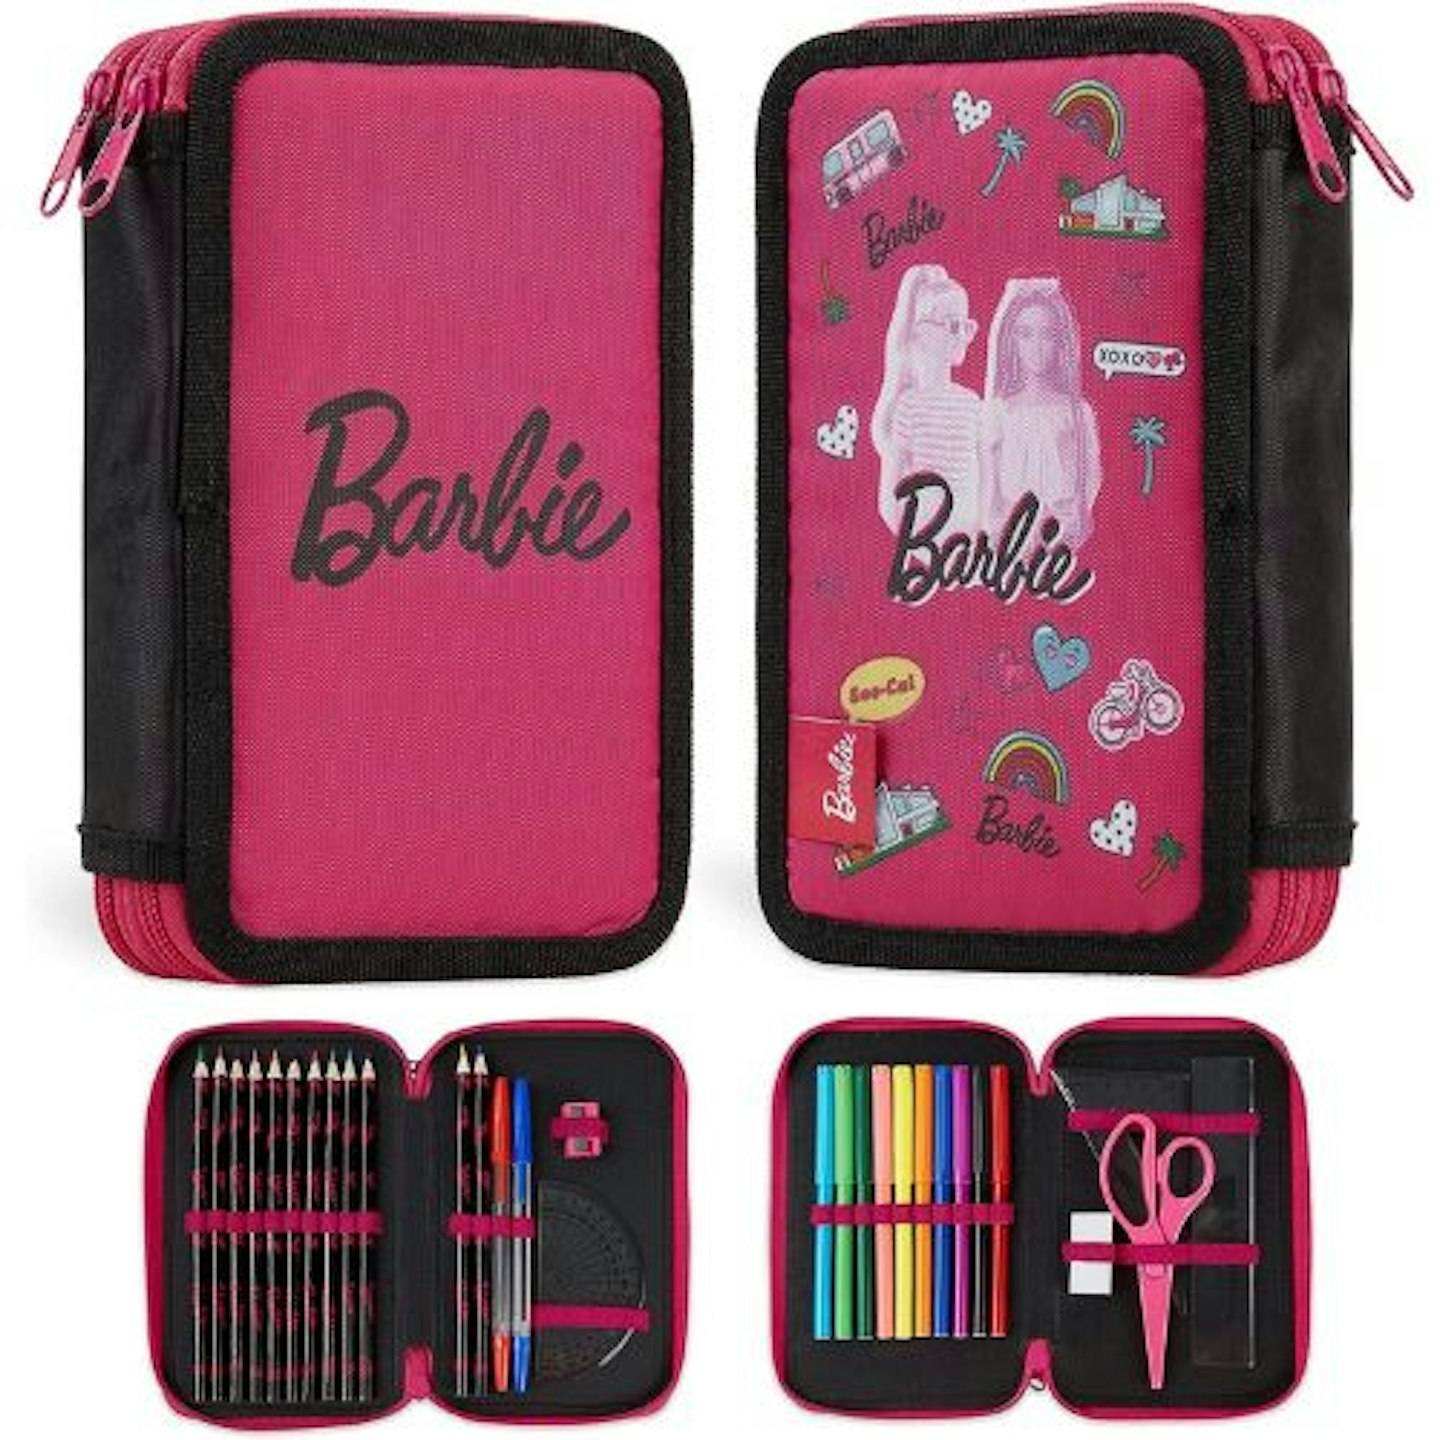 Best back to school supplies Barbie Pencil Case